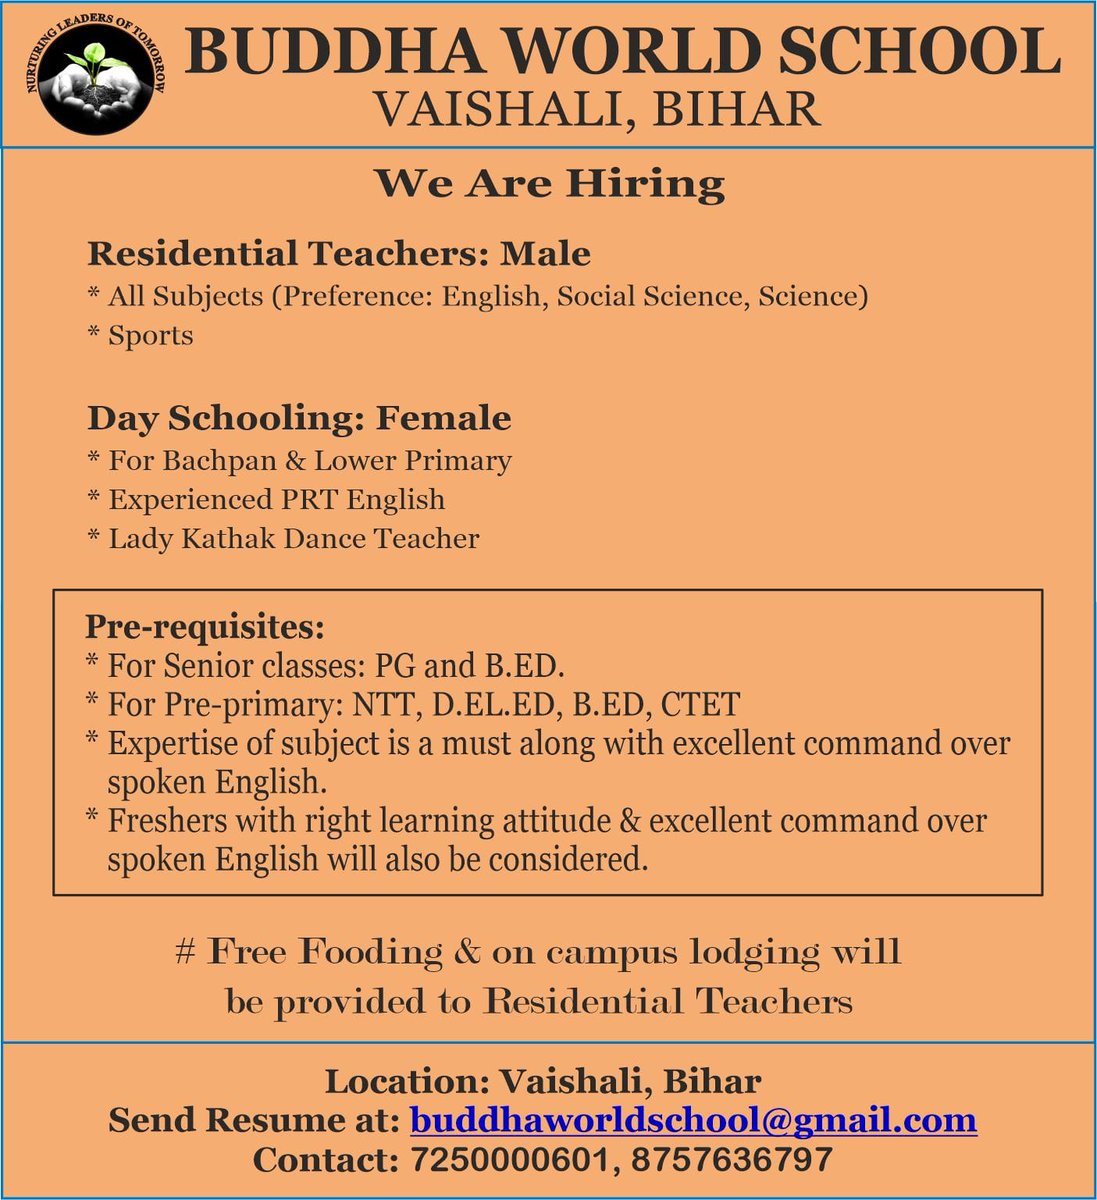 We are hiring teachers for PRT/TGT/PGT/PET at Buddha World School, Vaishali, Bihar. For more details: 📞 7250000601, 8757636797, Drop your resume: buddhaworldschool@gmail.com Website: wwwbuddhaworldschool.com #HiringNow #TEACHers #school #hiring @sarikamalhotra2 @Krish_Vaishali